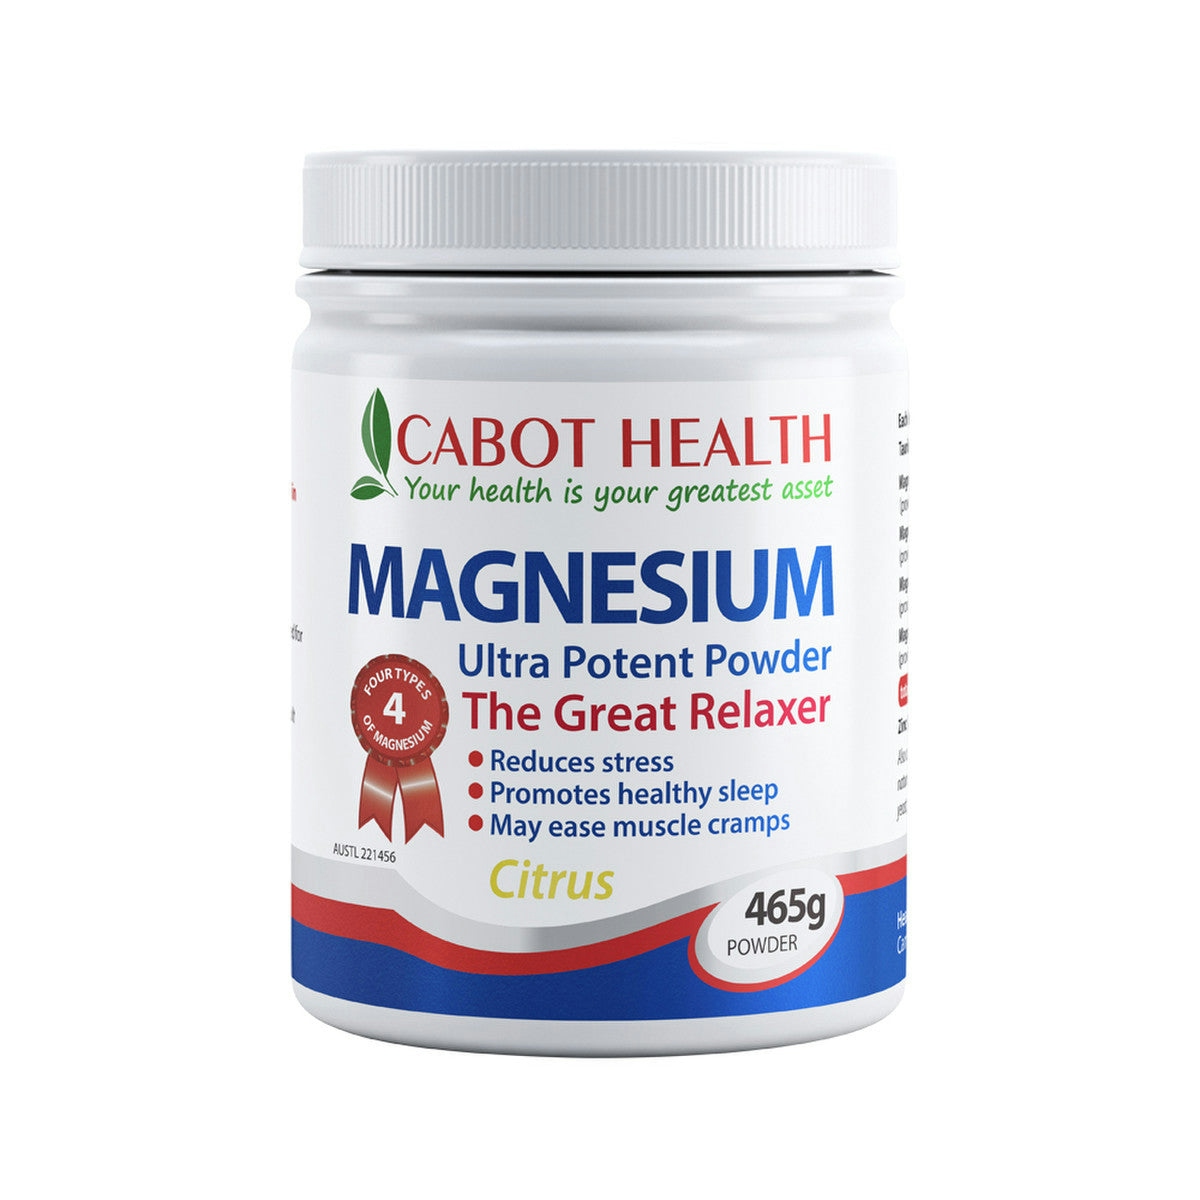 image of Cabot Health Magnesium Ultra Potent Citrus Powder 465g on white background